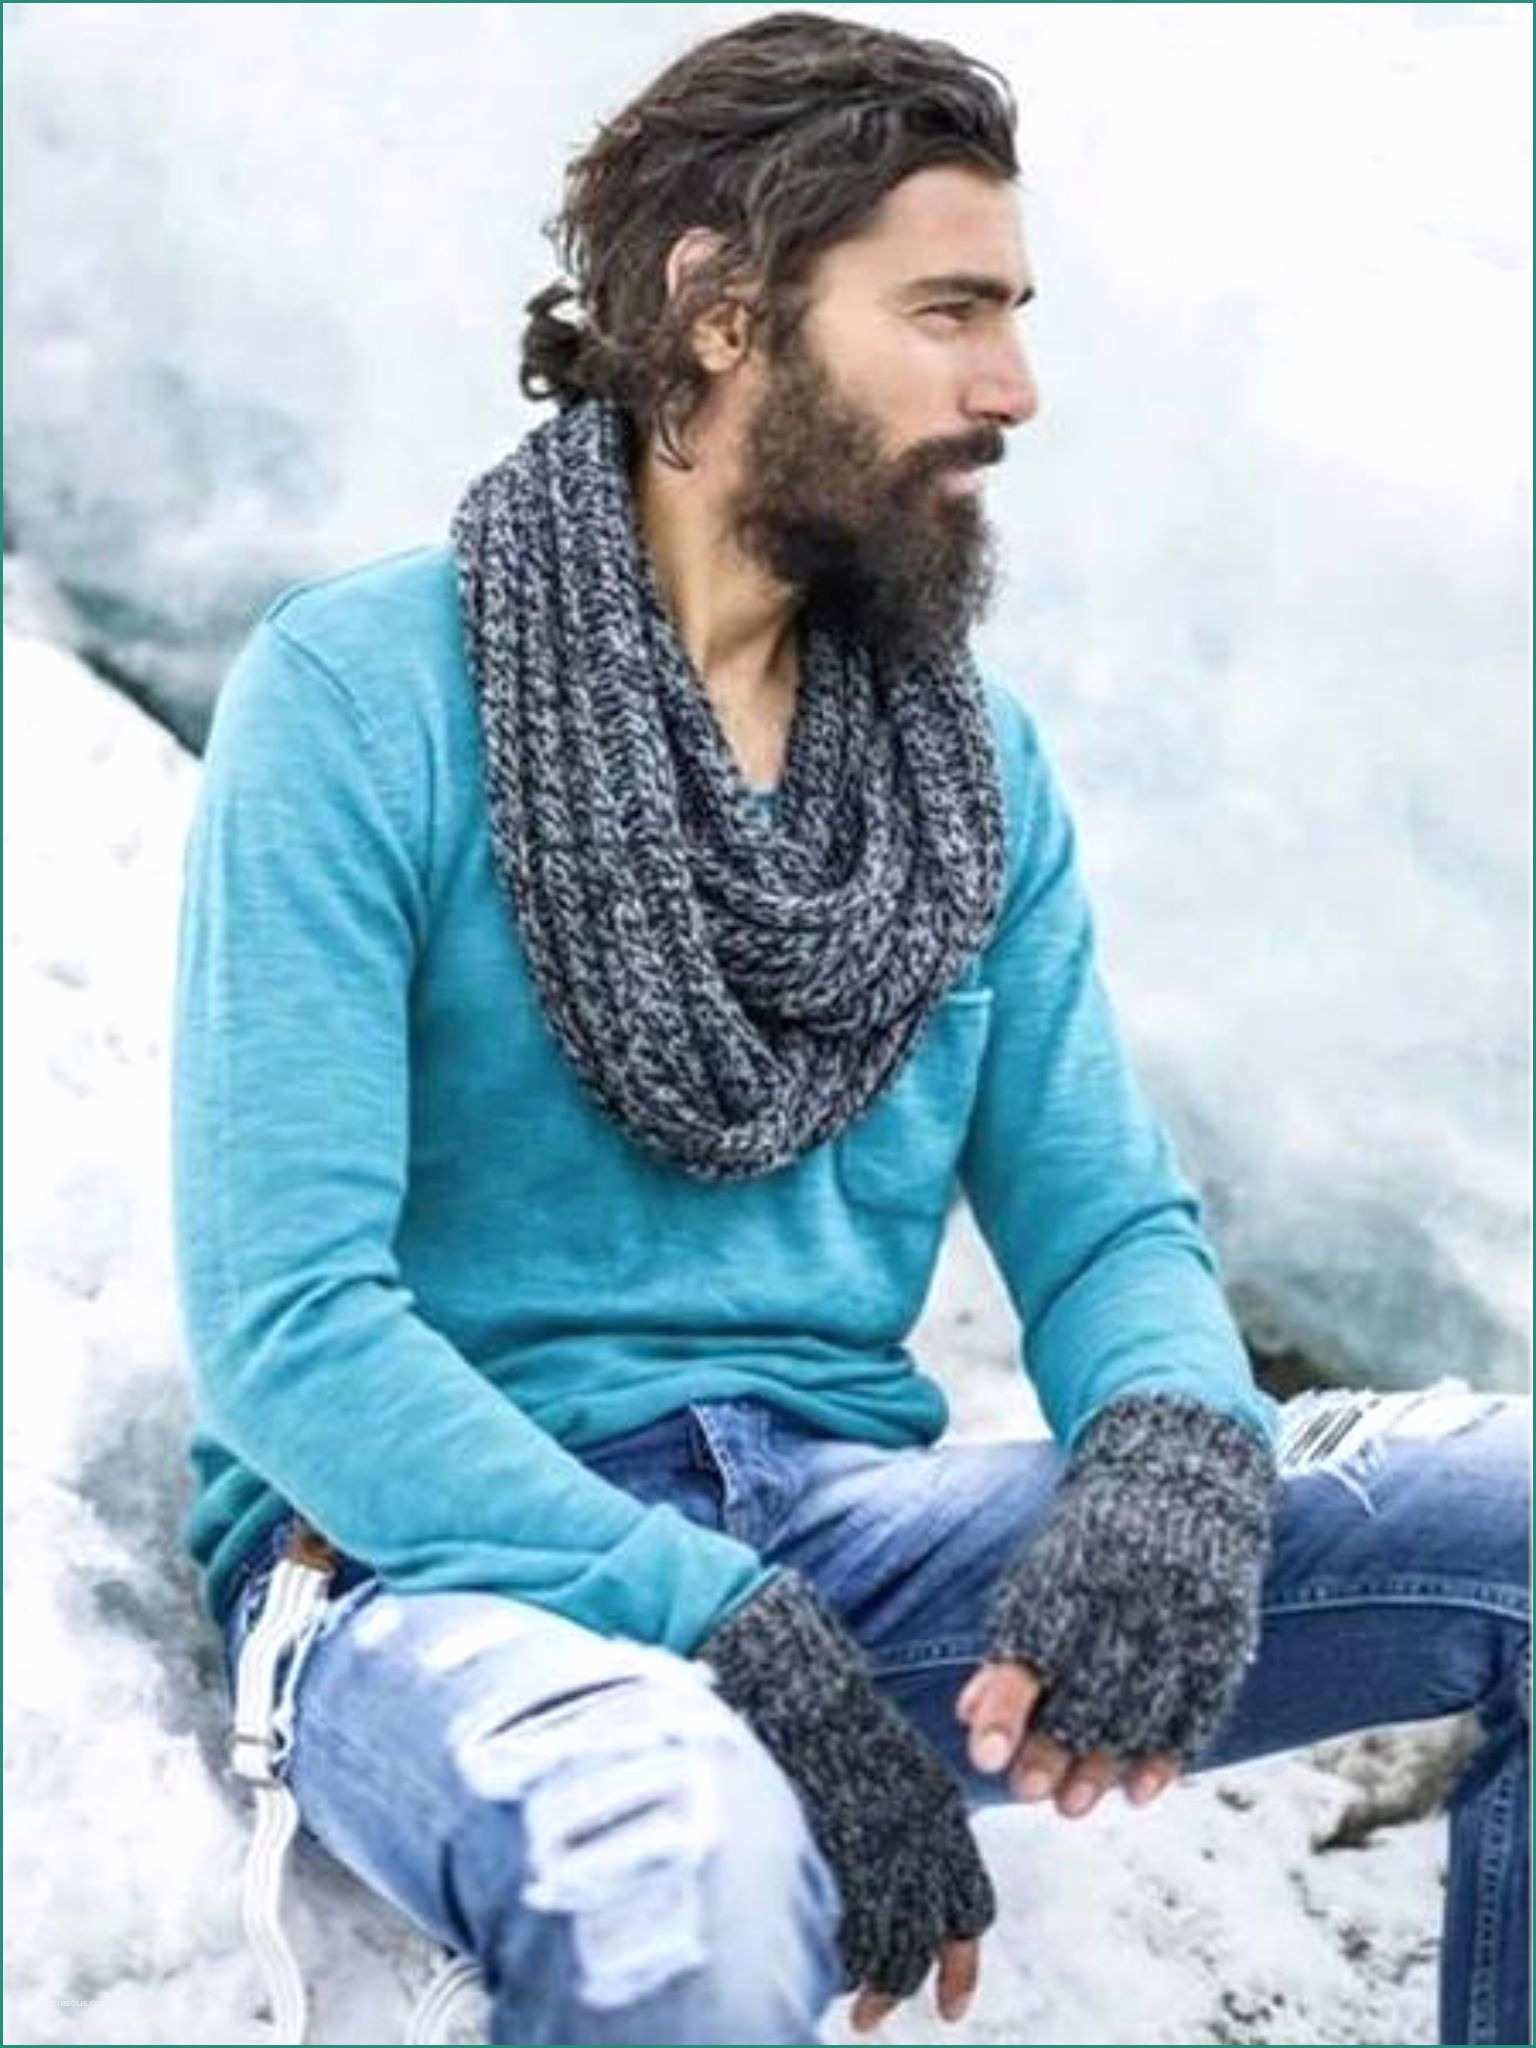 Immagini Taglio Capelli Uomo E More Reasons to Love Winter Ards and Long Hair Keep Men Warm